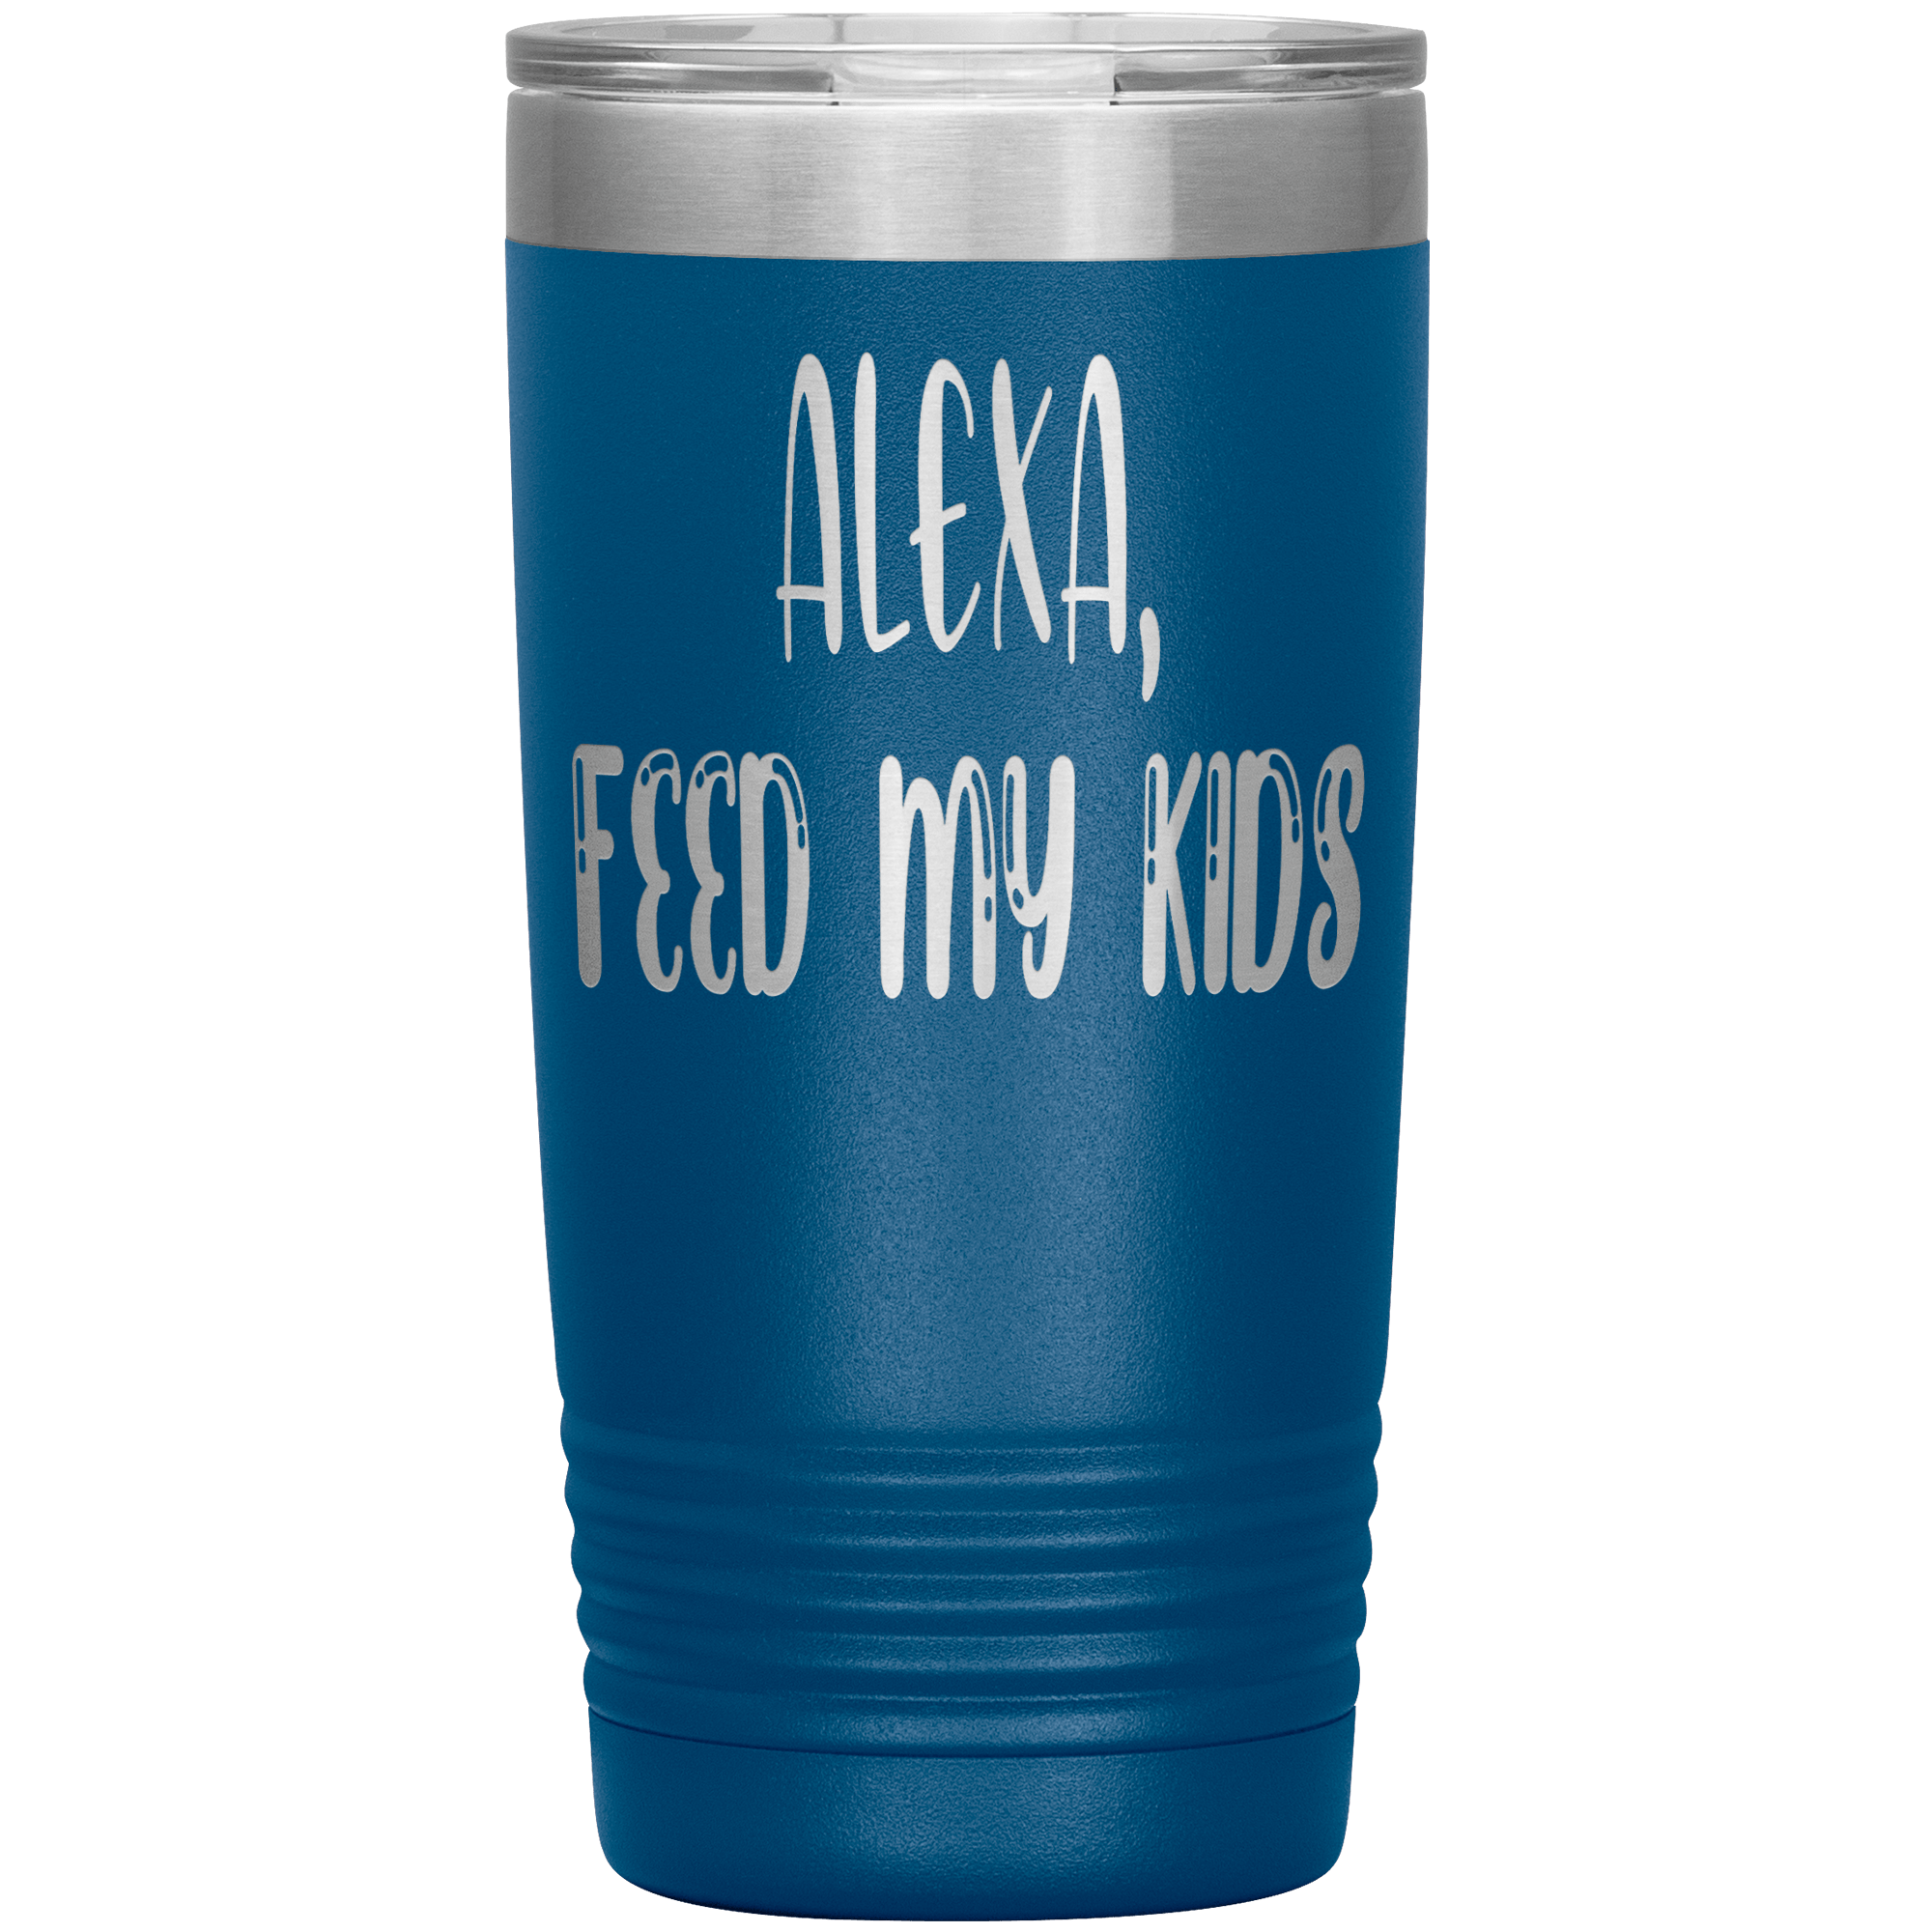 " ALEXA FEED MY KIDS " TUMBLER